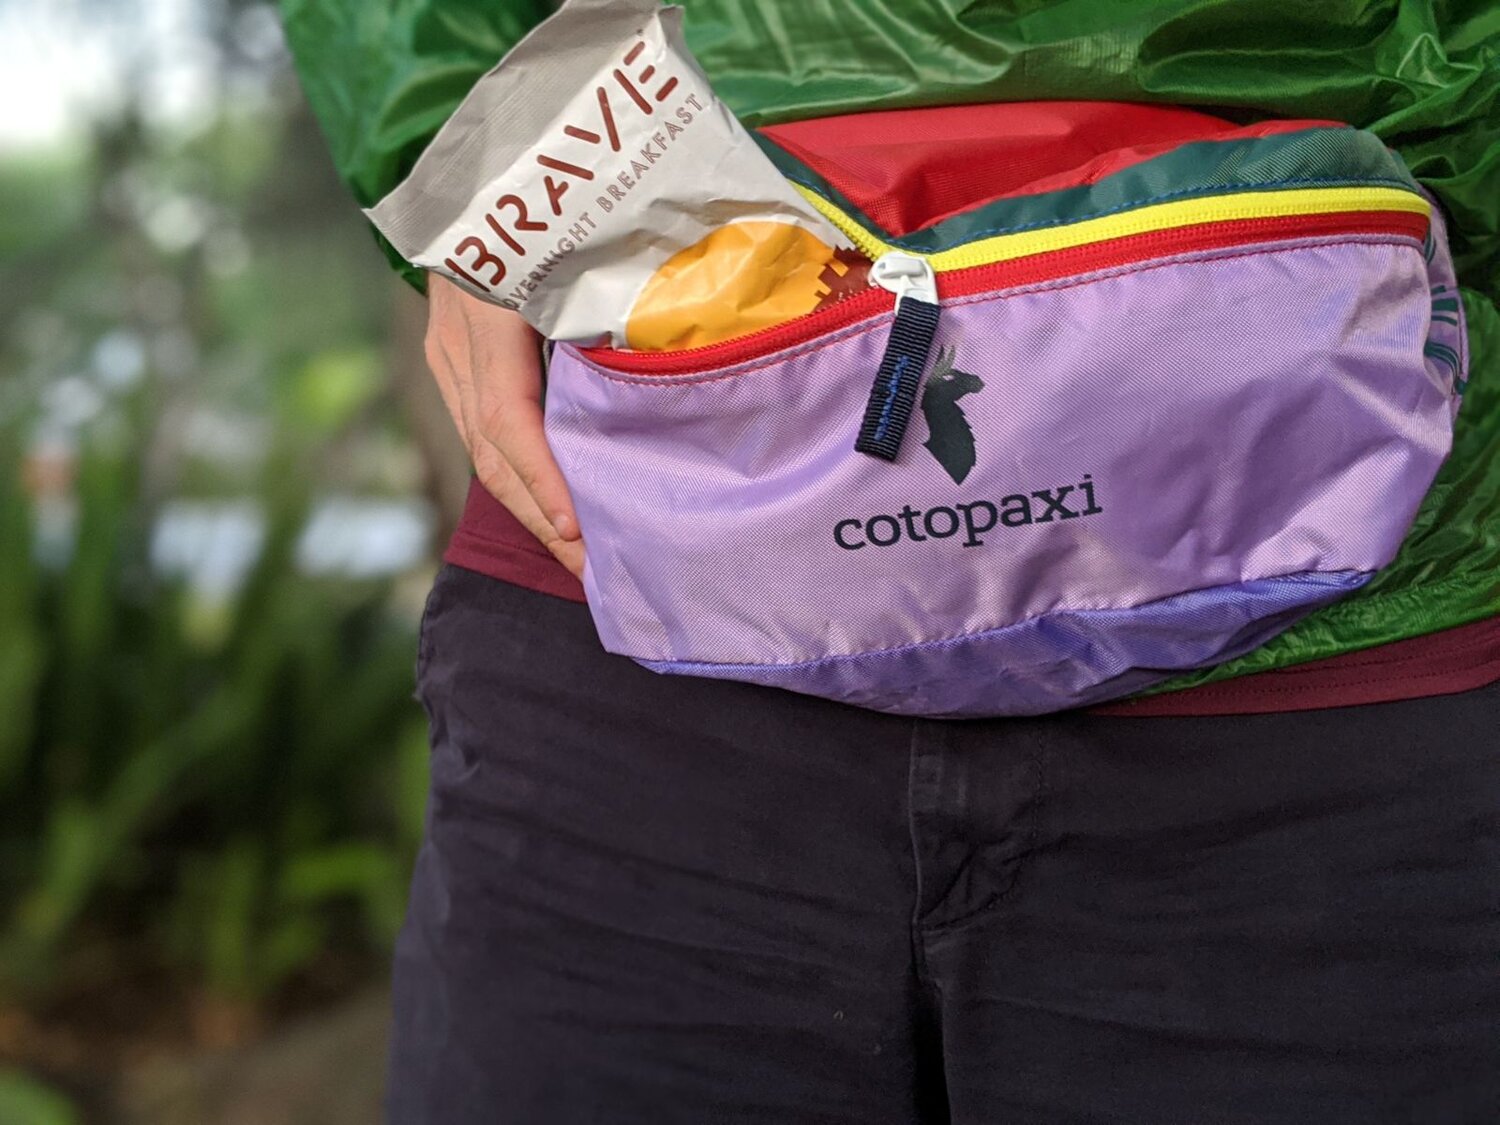 Fanny Pack for Men Multi-Pockets Waist Bag Water-resistant Lightweight  Chest Bag Expandable Belt Bag for Sport Travel Walking Running Hiking  Cycling